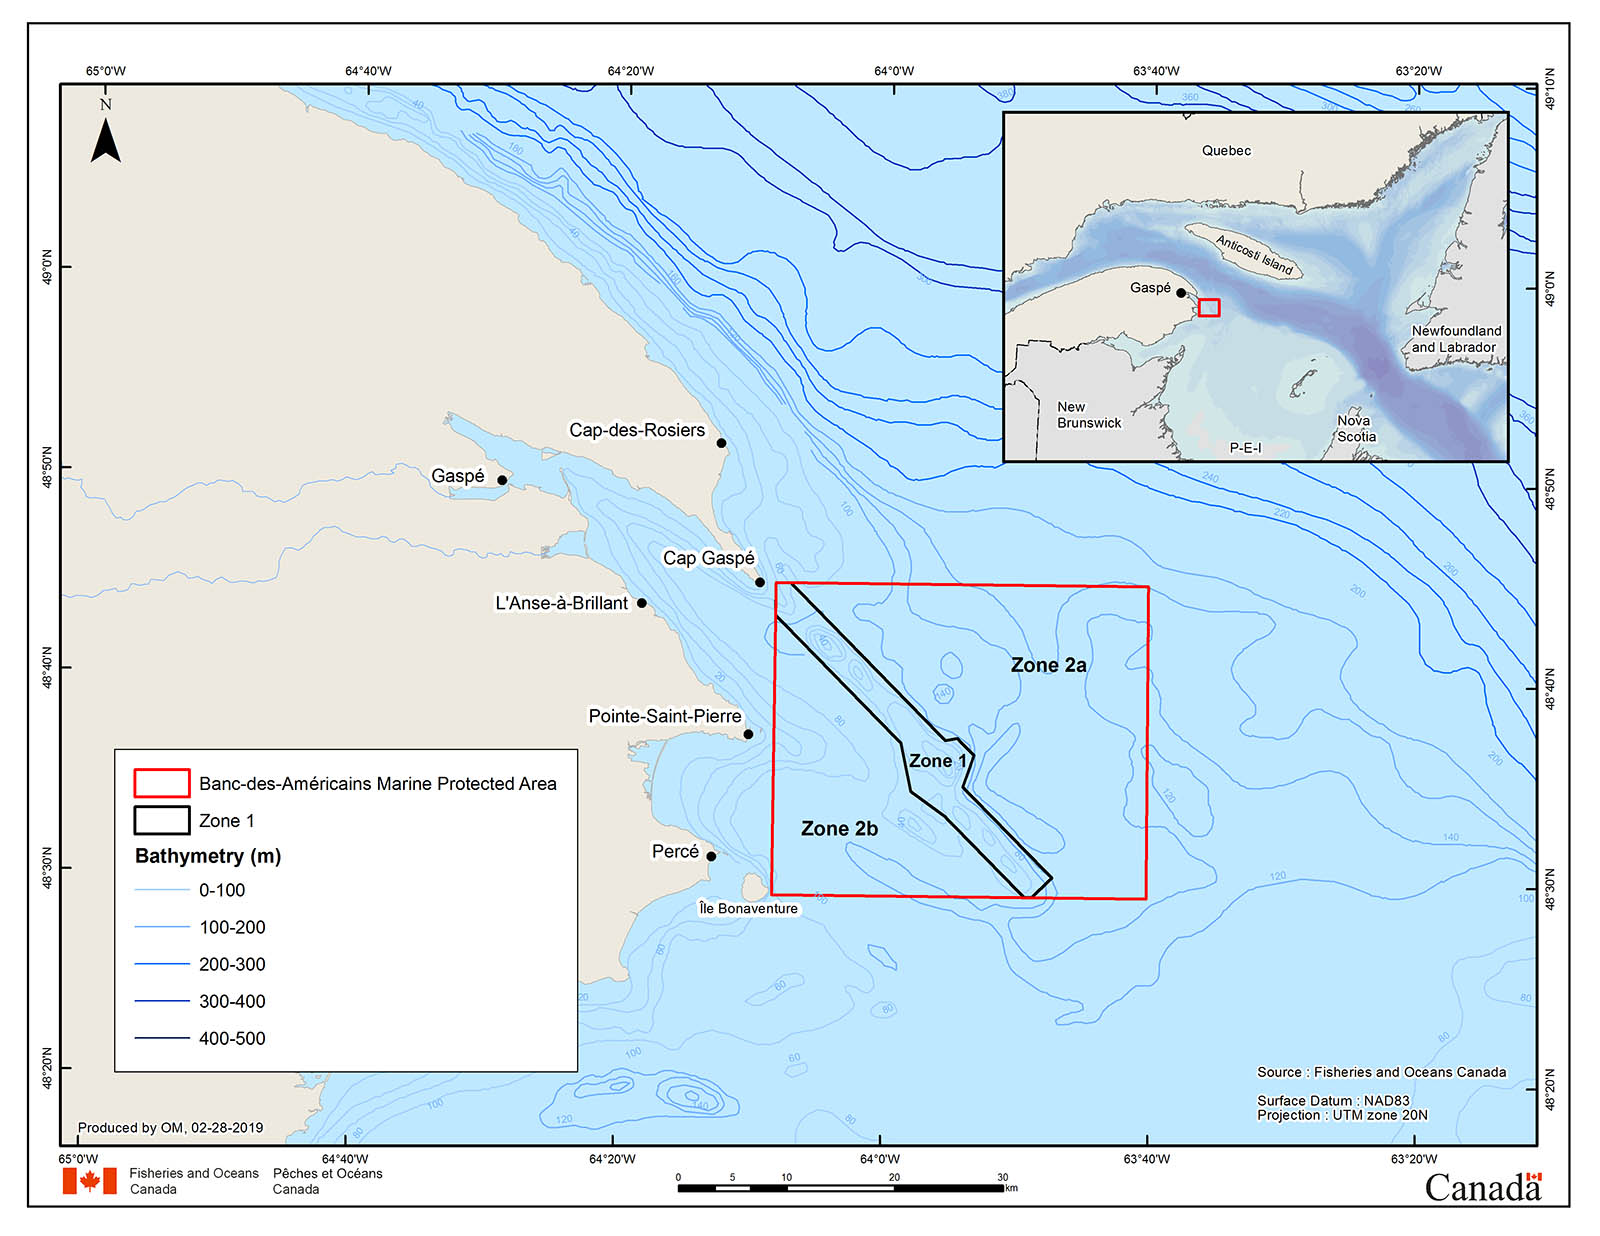 Map: Banc-des-Américains Marine Protected Area (MPA).